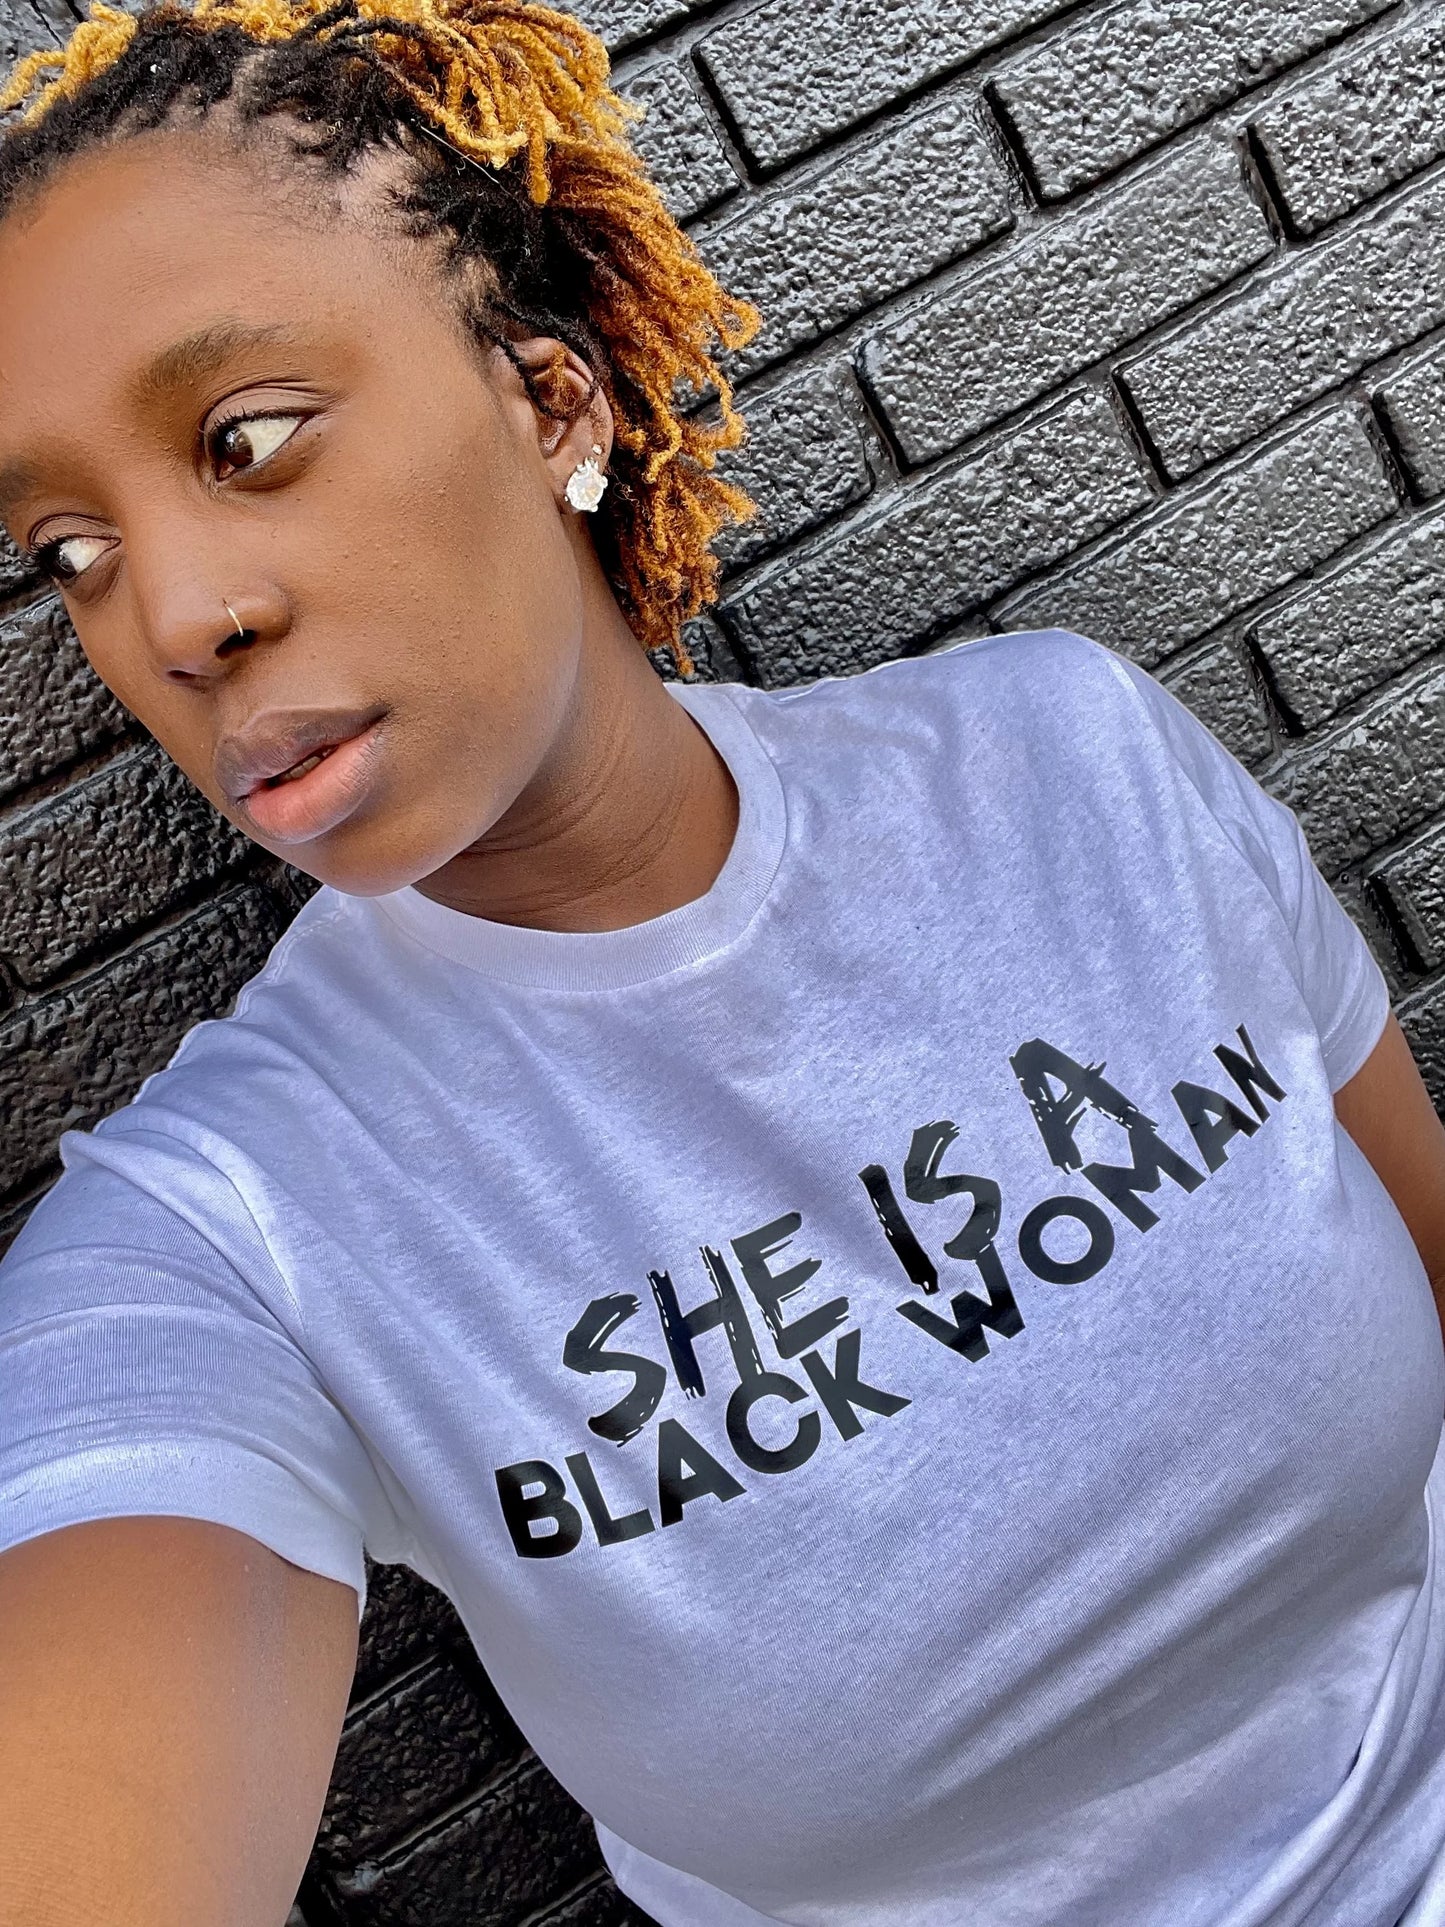 She Is A Black Woman T-Shirt